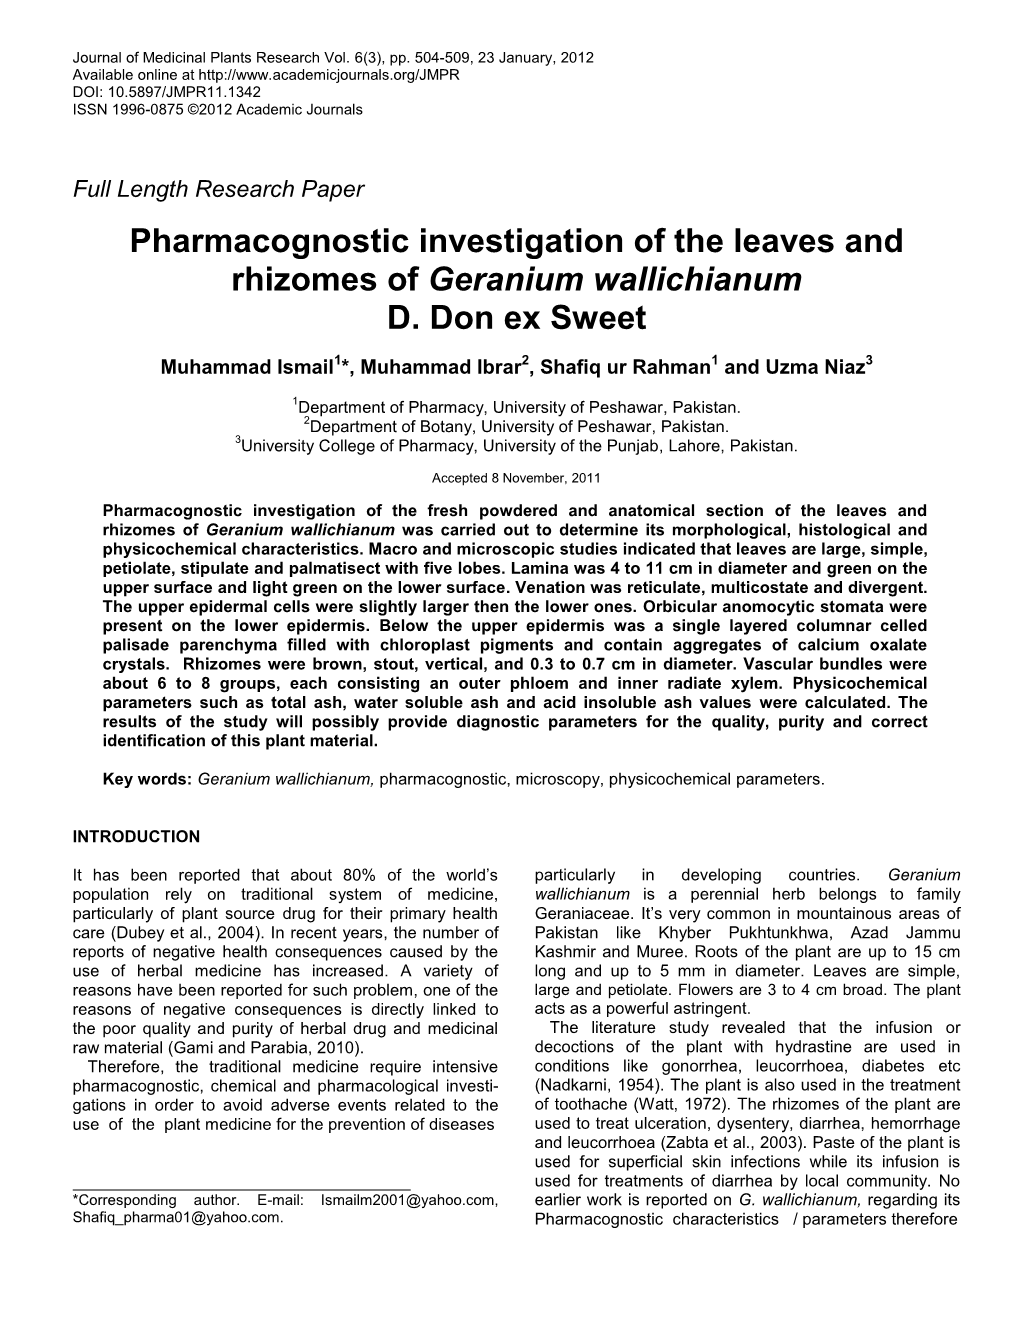 Pharmacognostic Investigation of the Leaves and Rhizome of Geranium